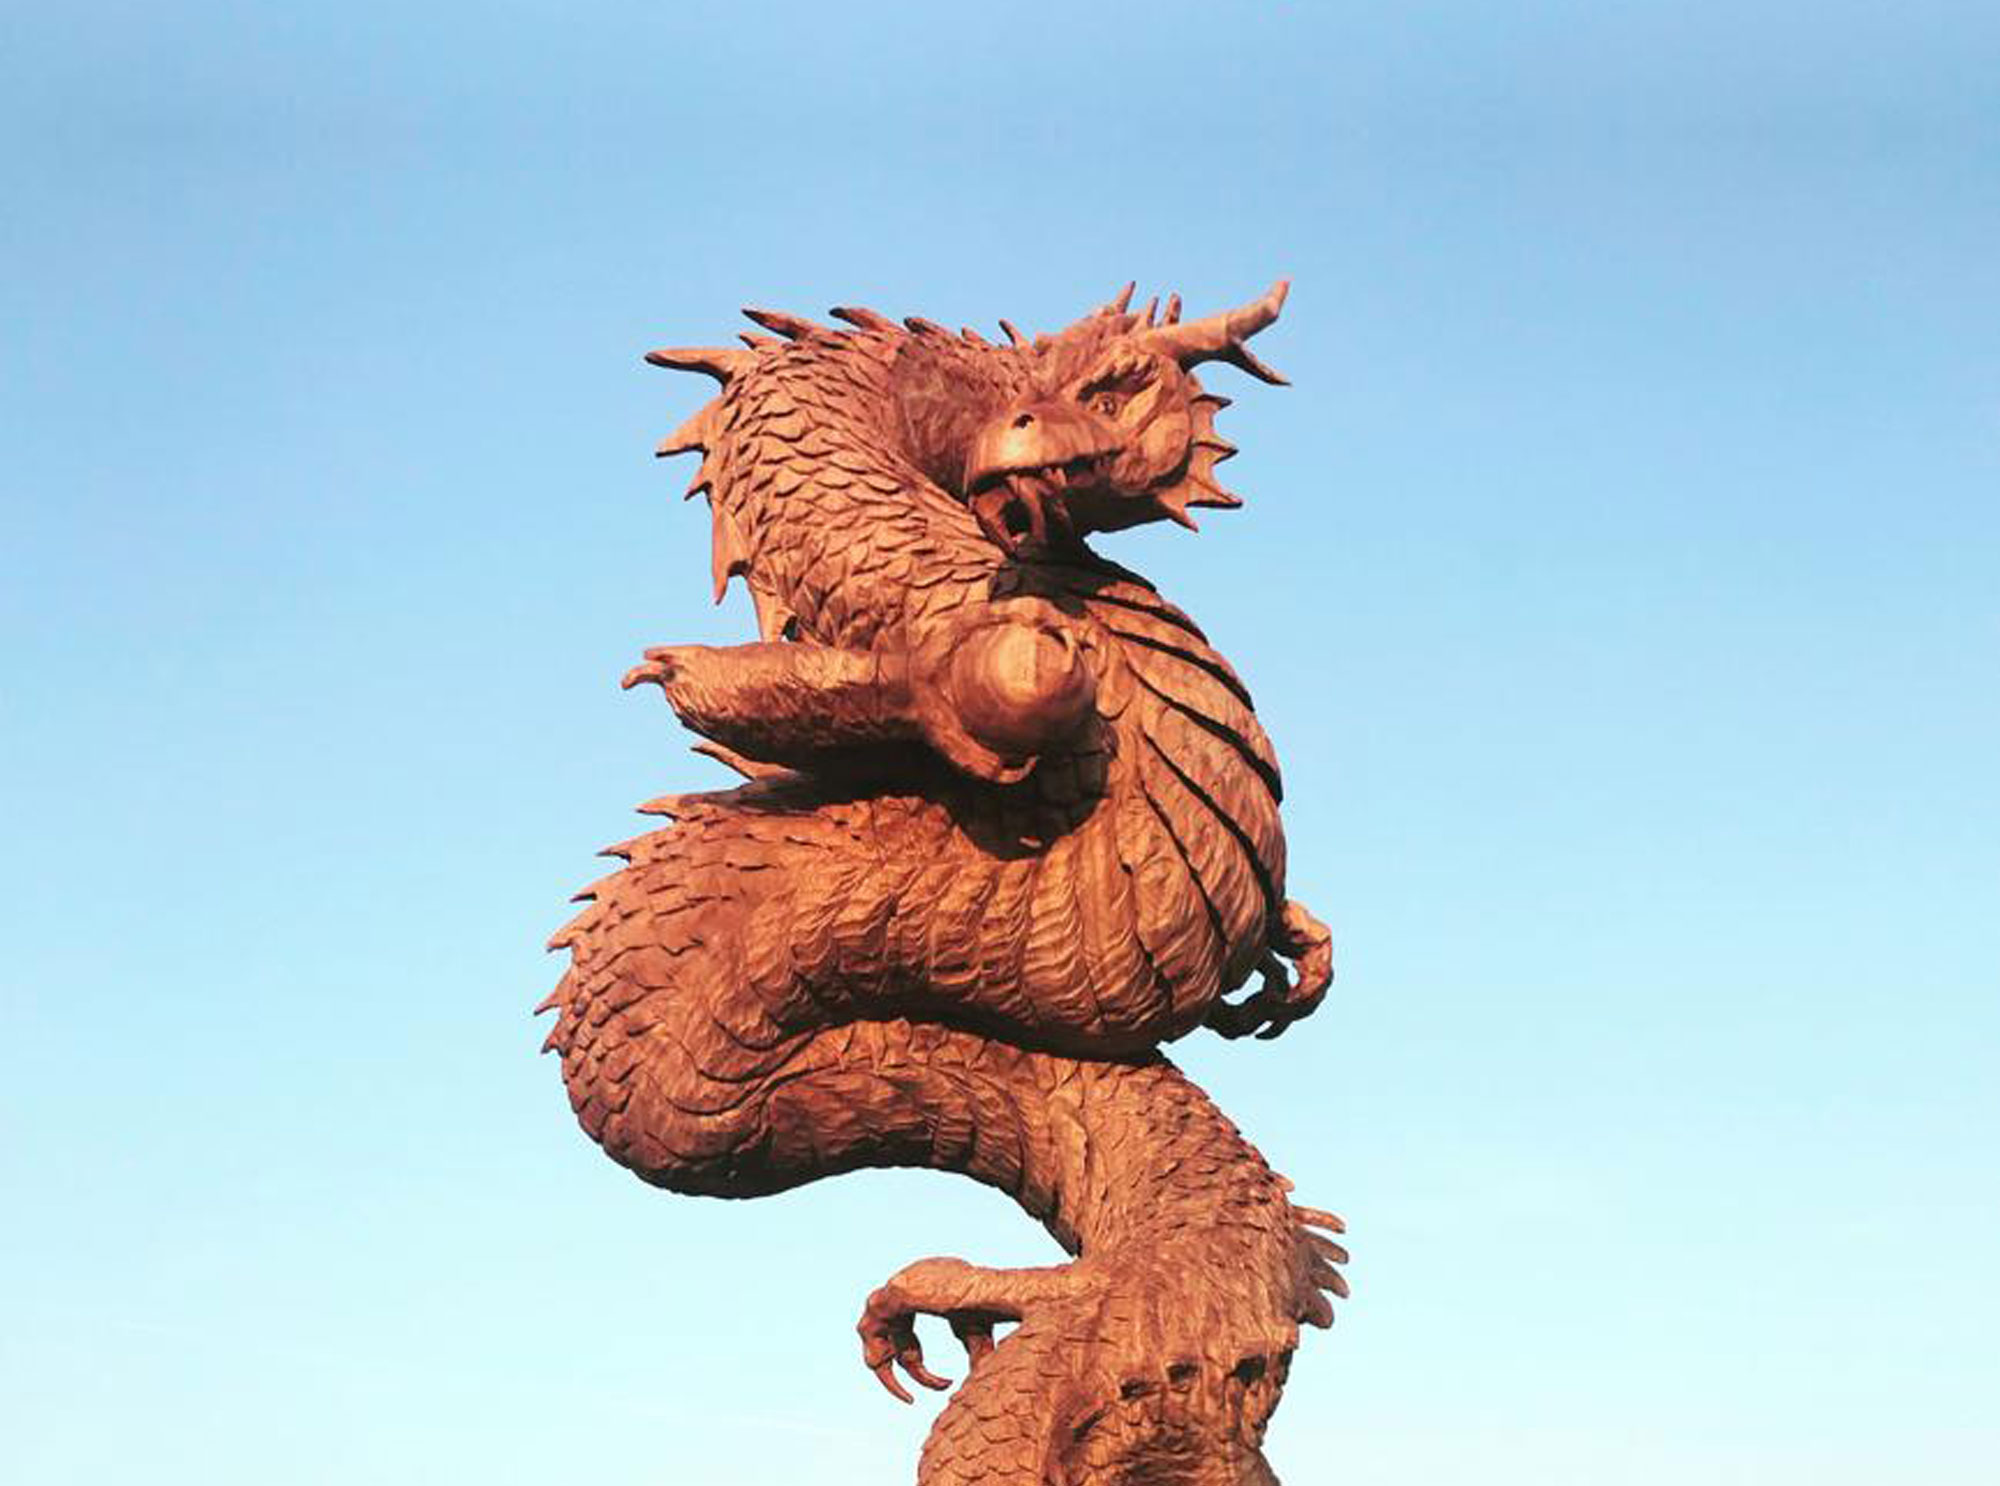 Chinese Dragon sculpture by Matthew Crabb